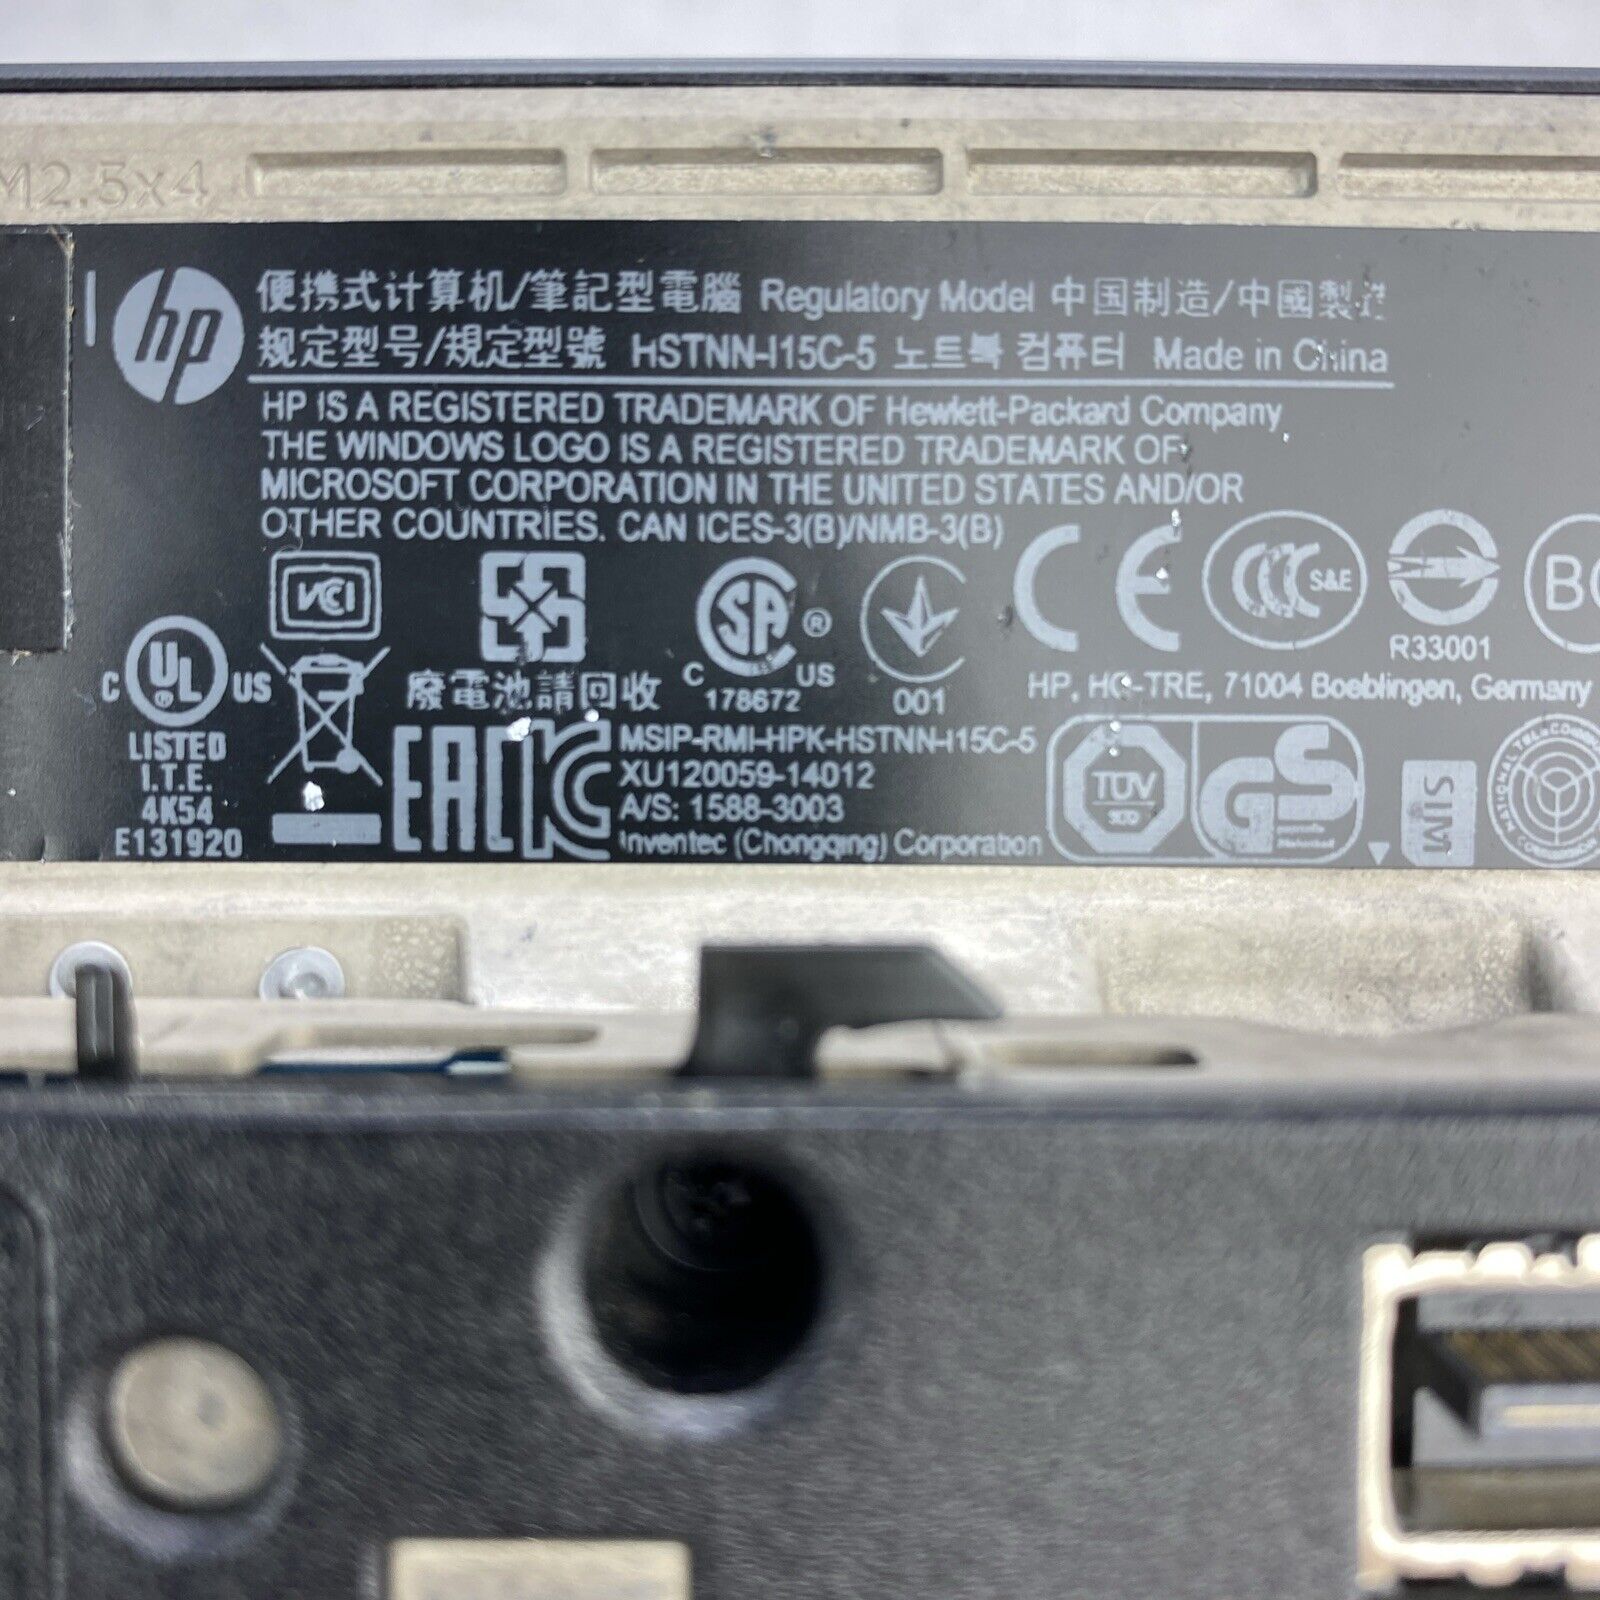 HP ProBook 650 G1 15.6" Intel Core i5-4300M 2.60GHz 4GB RAM No Battery No HDD OS